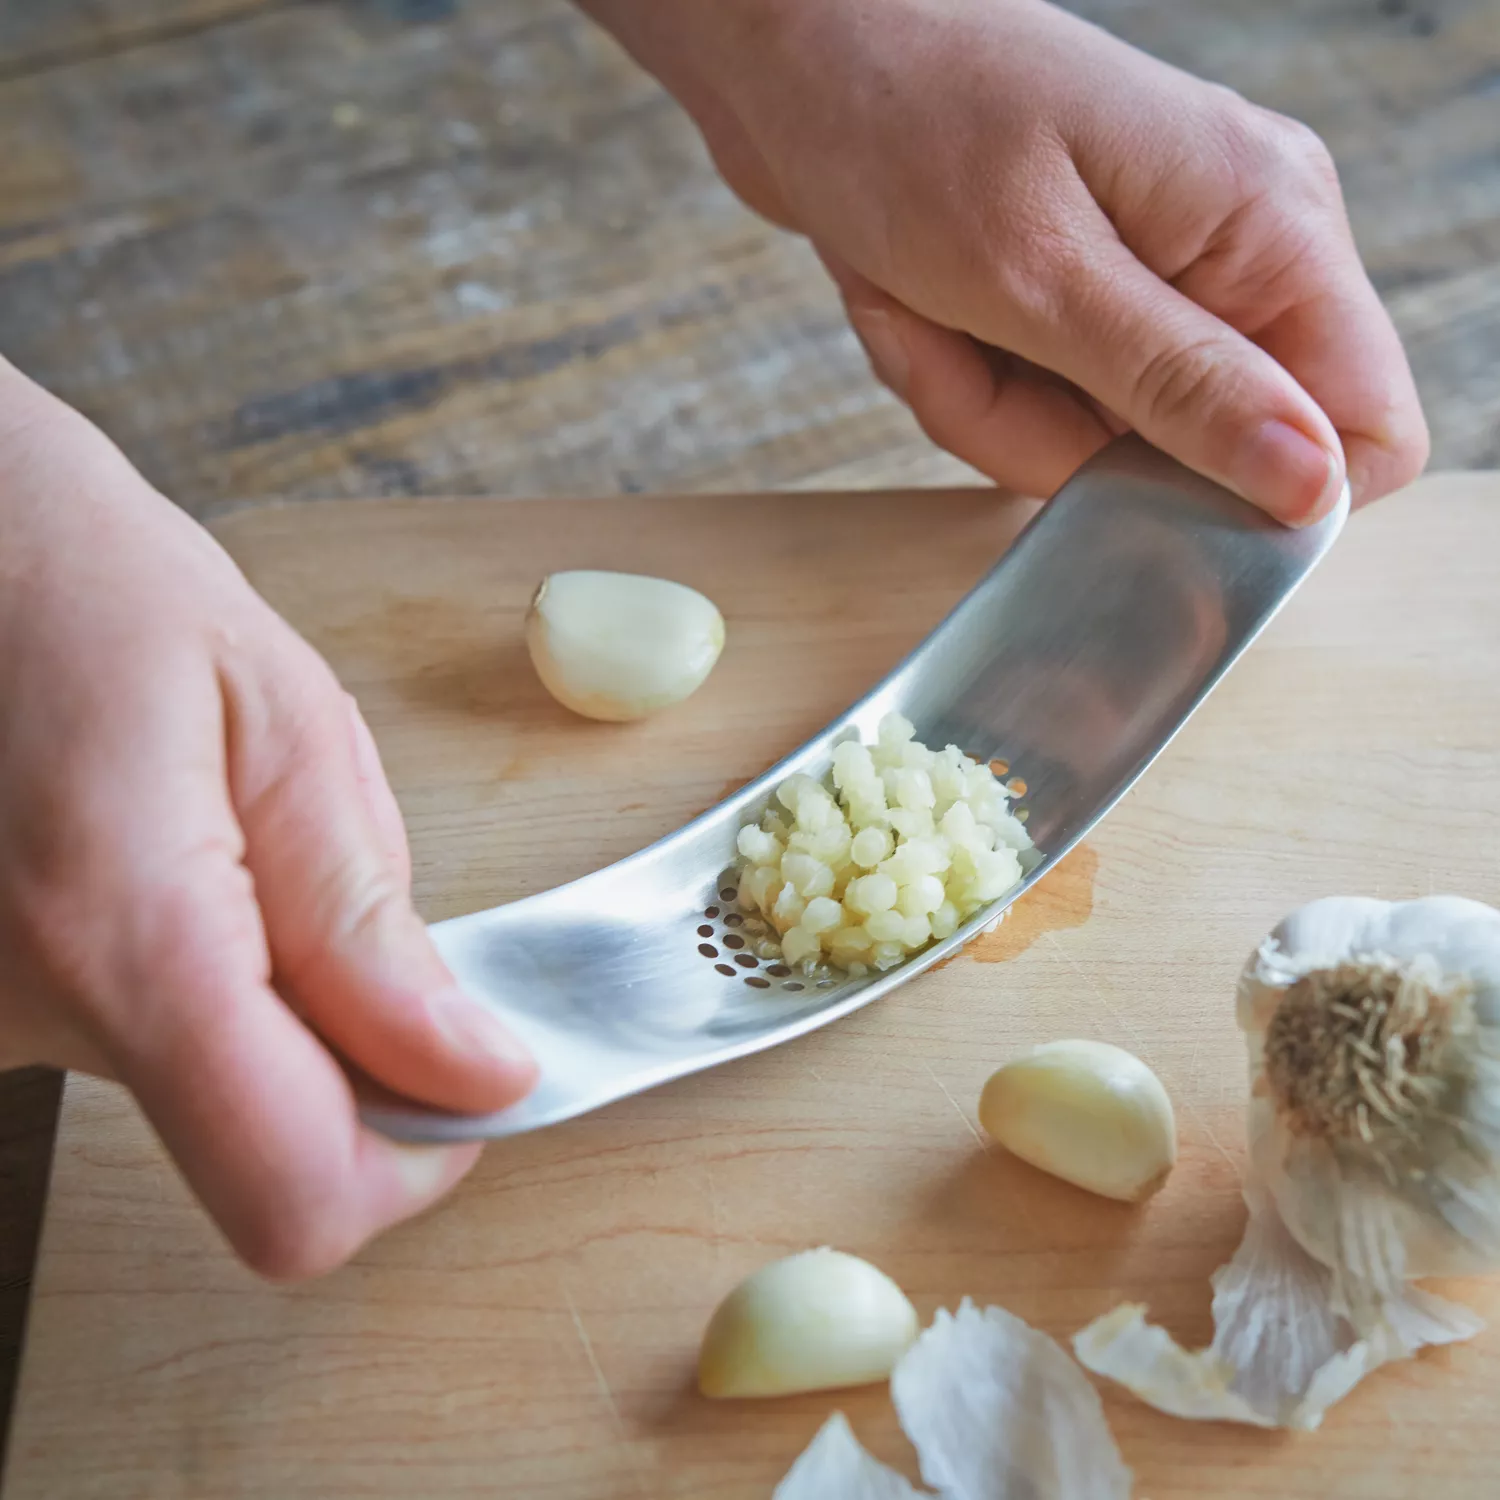 Zyliss Easy Clean Garlic Press & Mincer